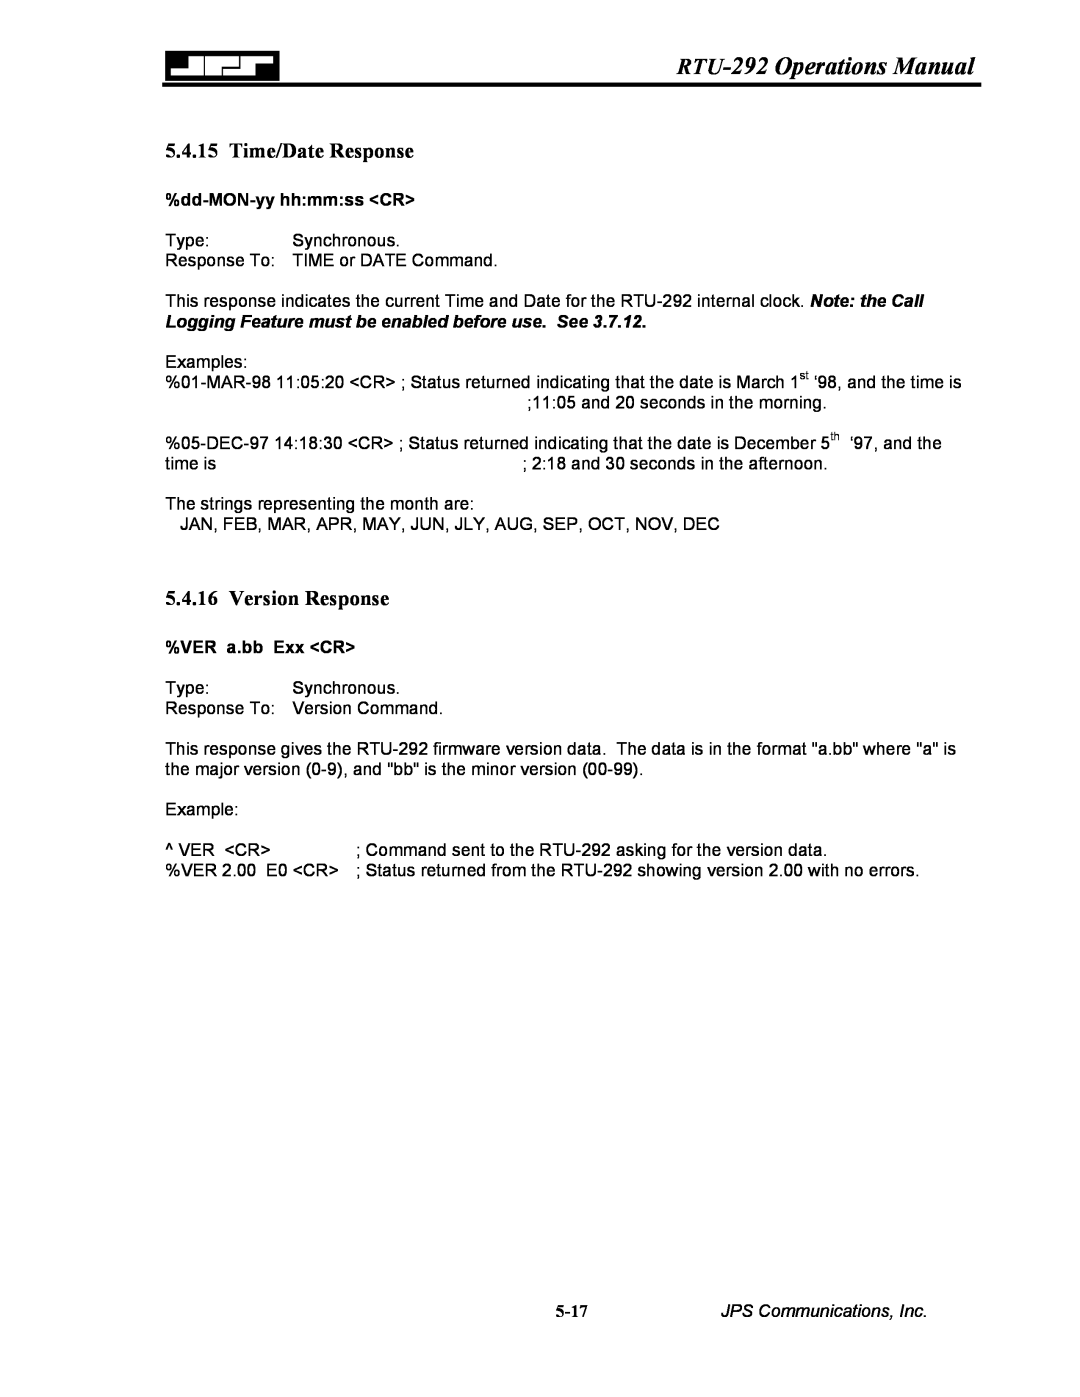 Nortel Networks RTU-292 Operations Manual, Time/Date Response, Version Response, JPS Communications, Inc 